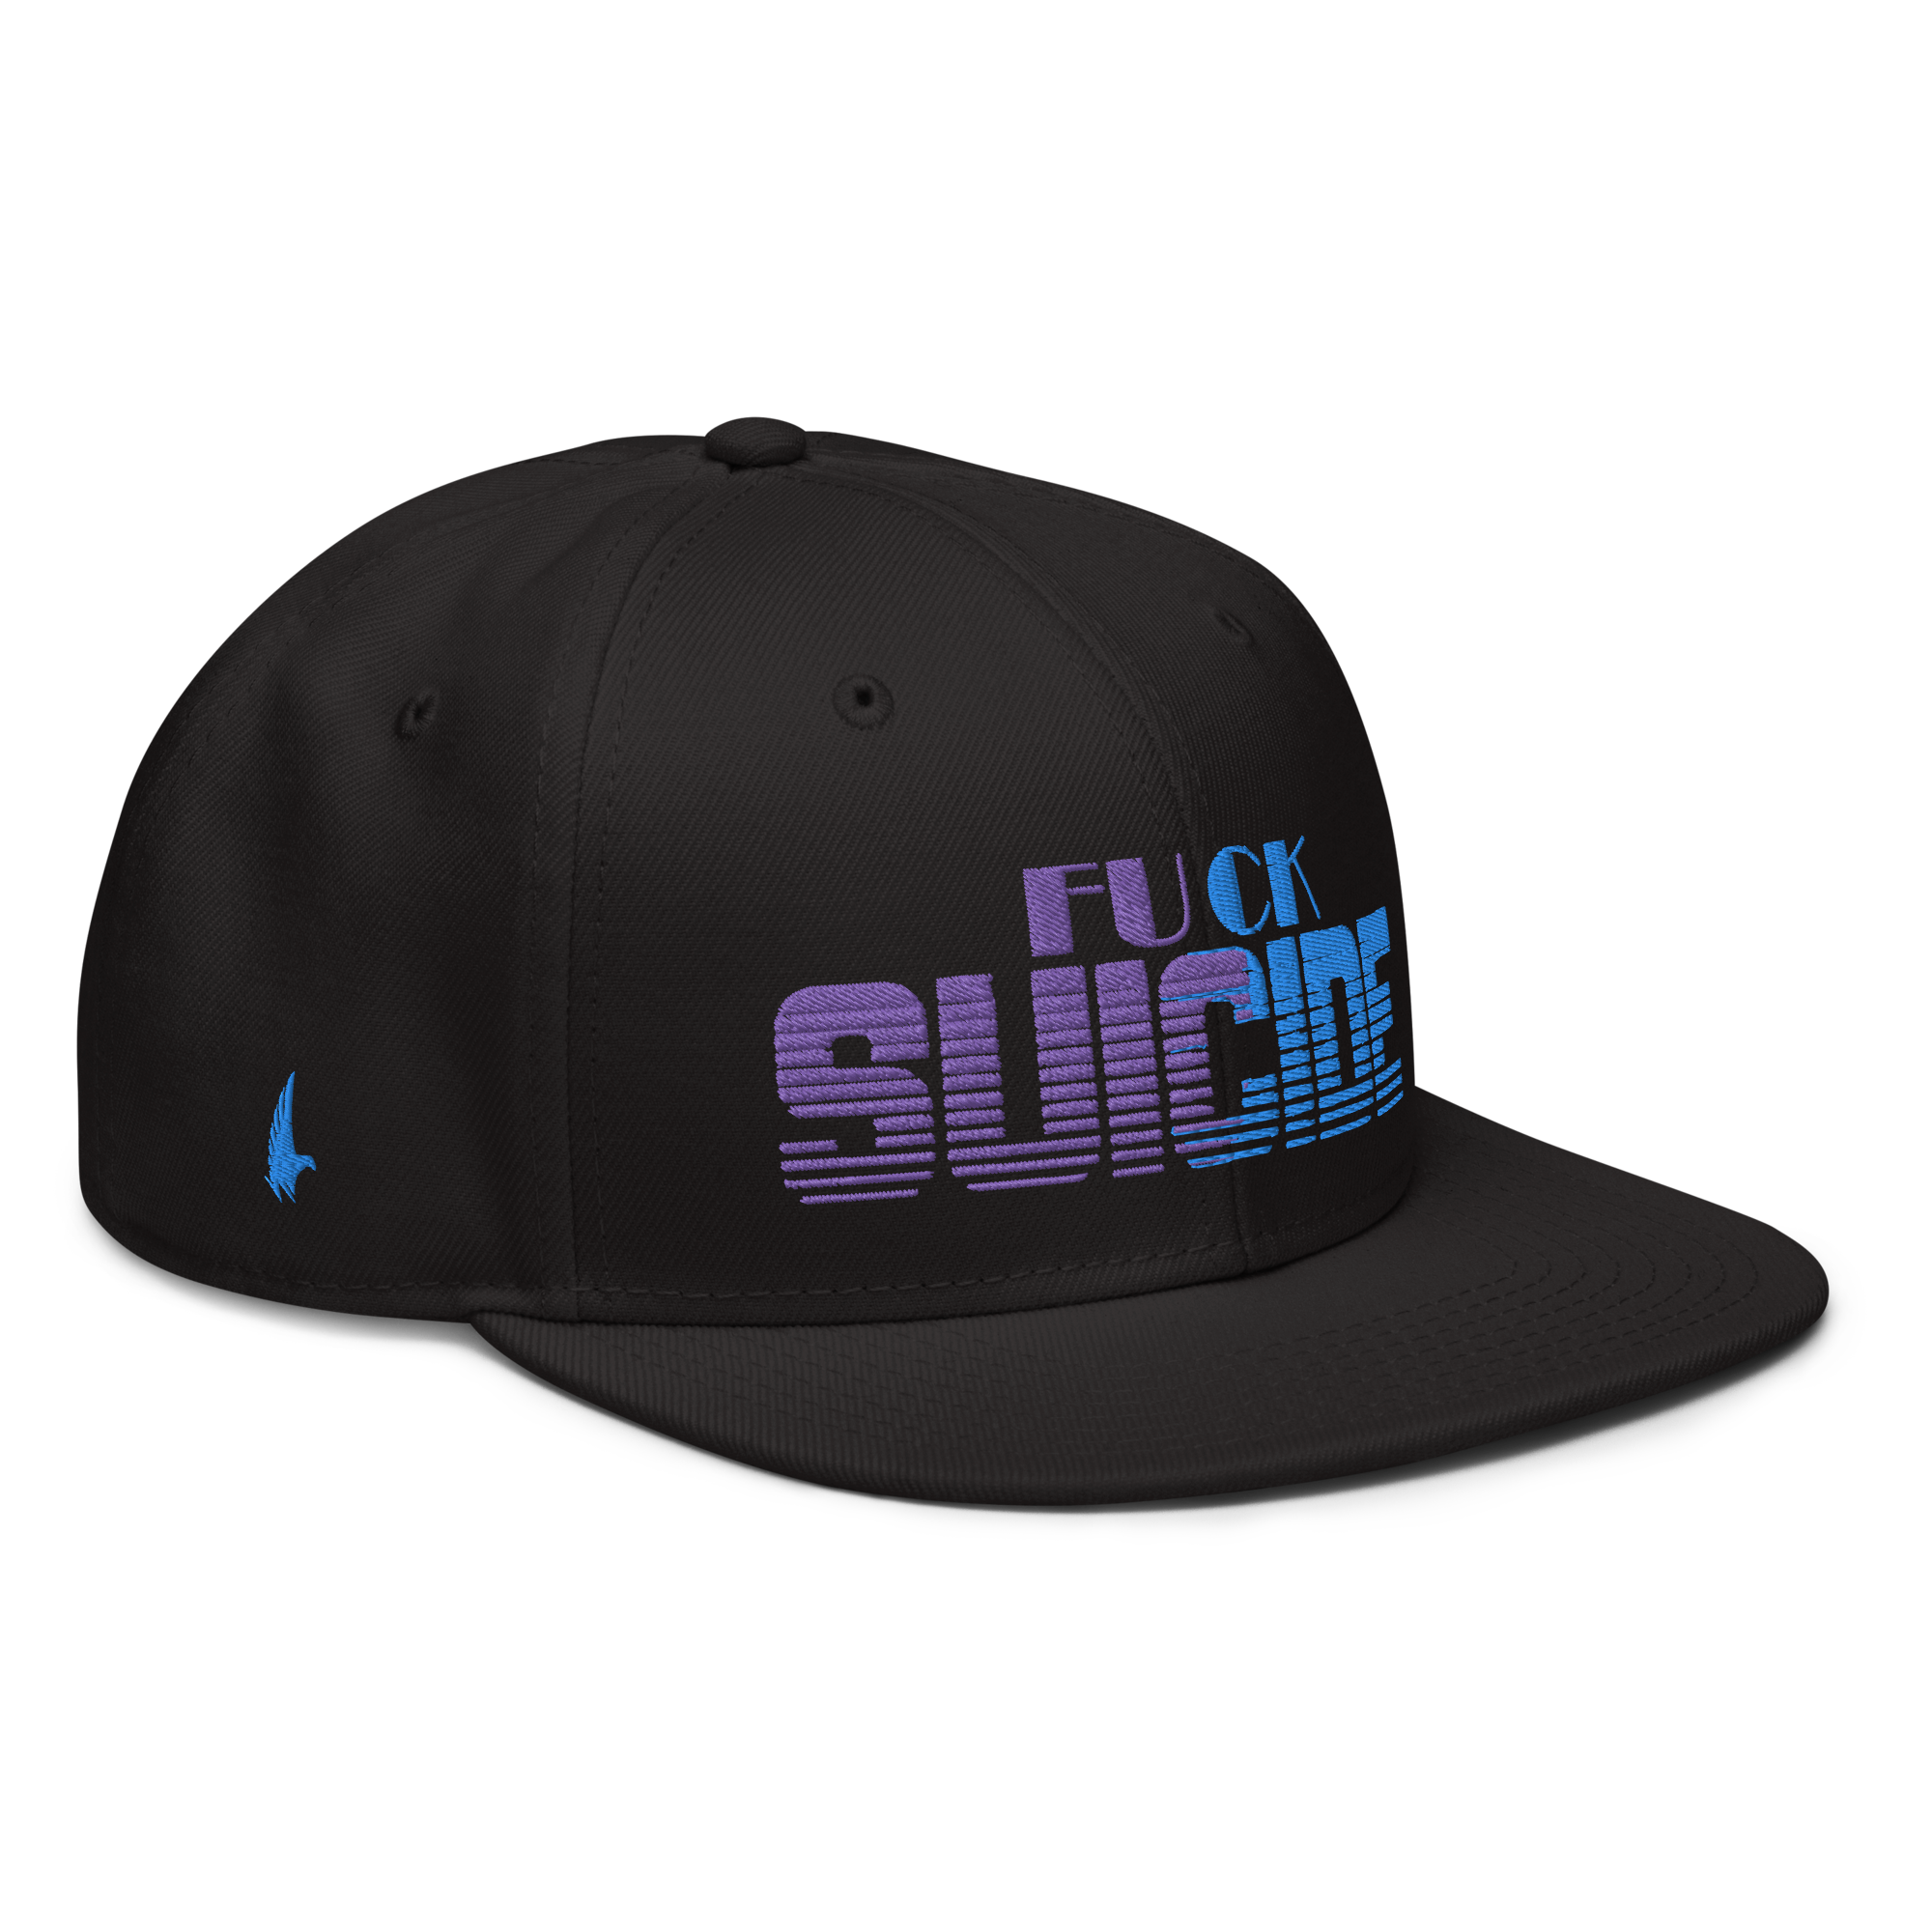 Fk Suicide Snapback Hat - Black Adorn OS - Loyalty Vibes